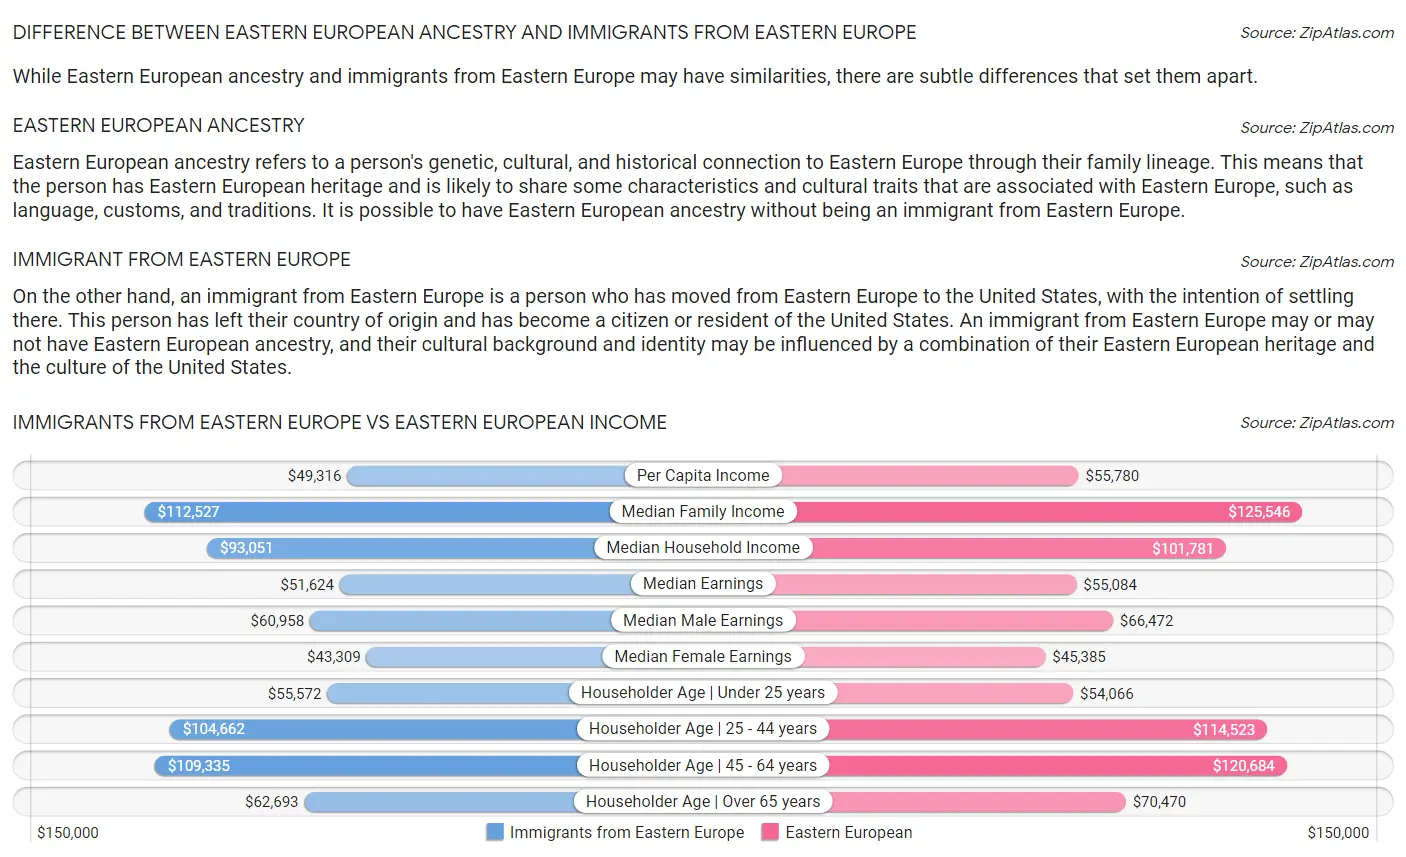 Immigrants from Eastern Europe vs Eastern European Income